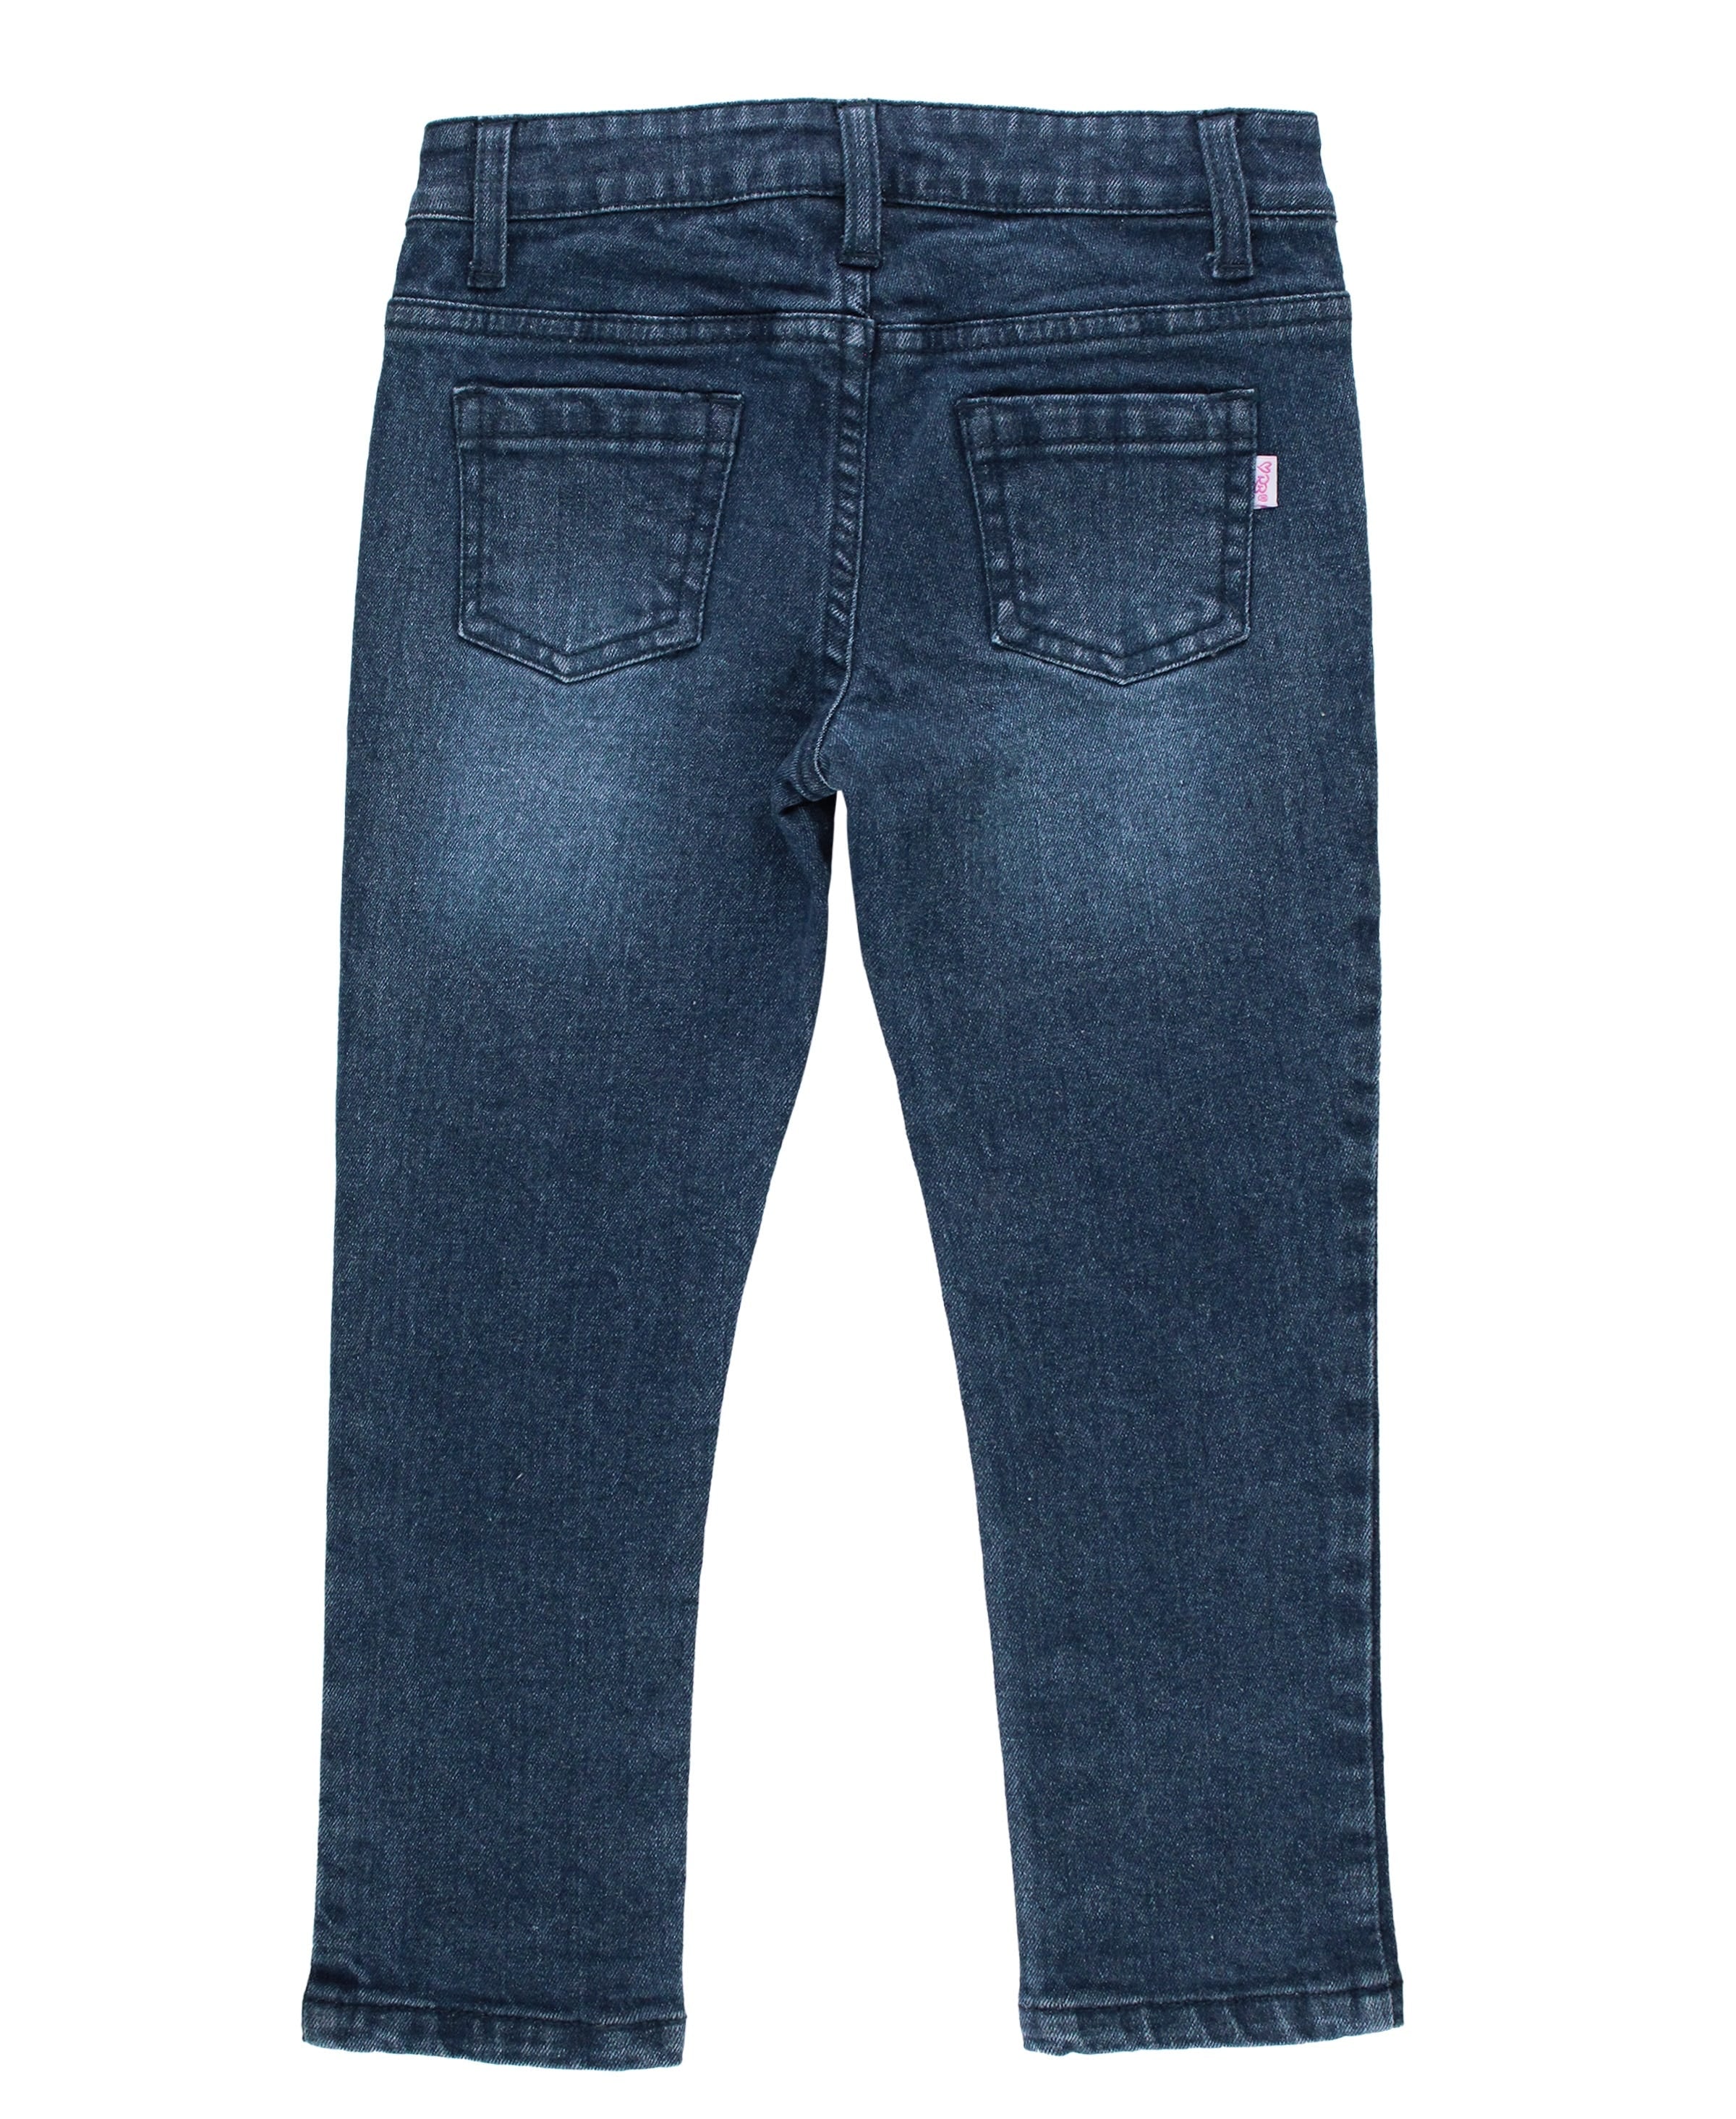 Ruffle Butts Medium Wash Skinny Jeans (Final Sale)